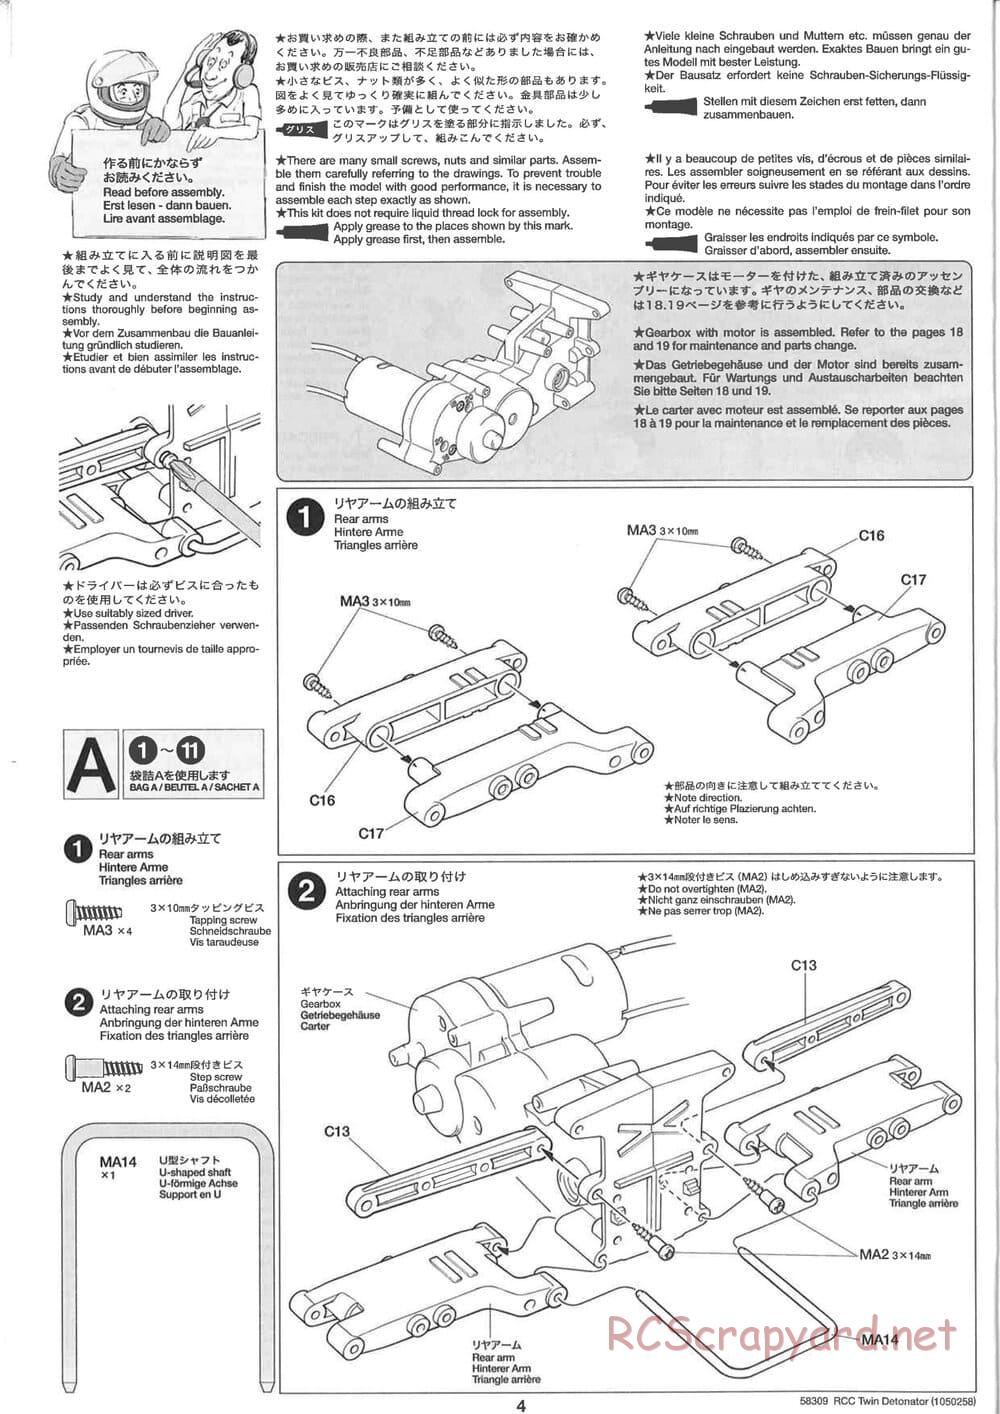 Tamiya - Twin Detonator - WR-01 Chassis - Manual - Page 4